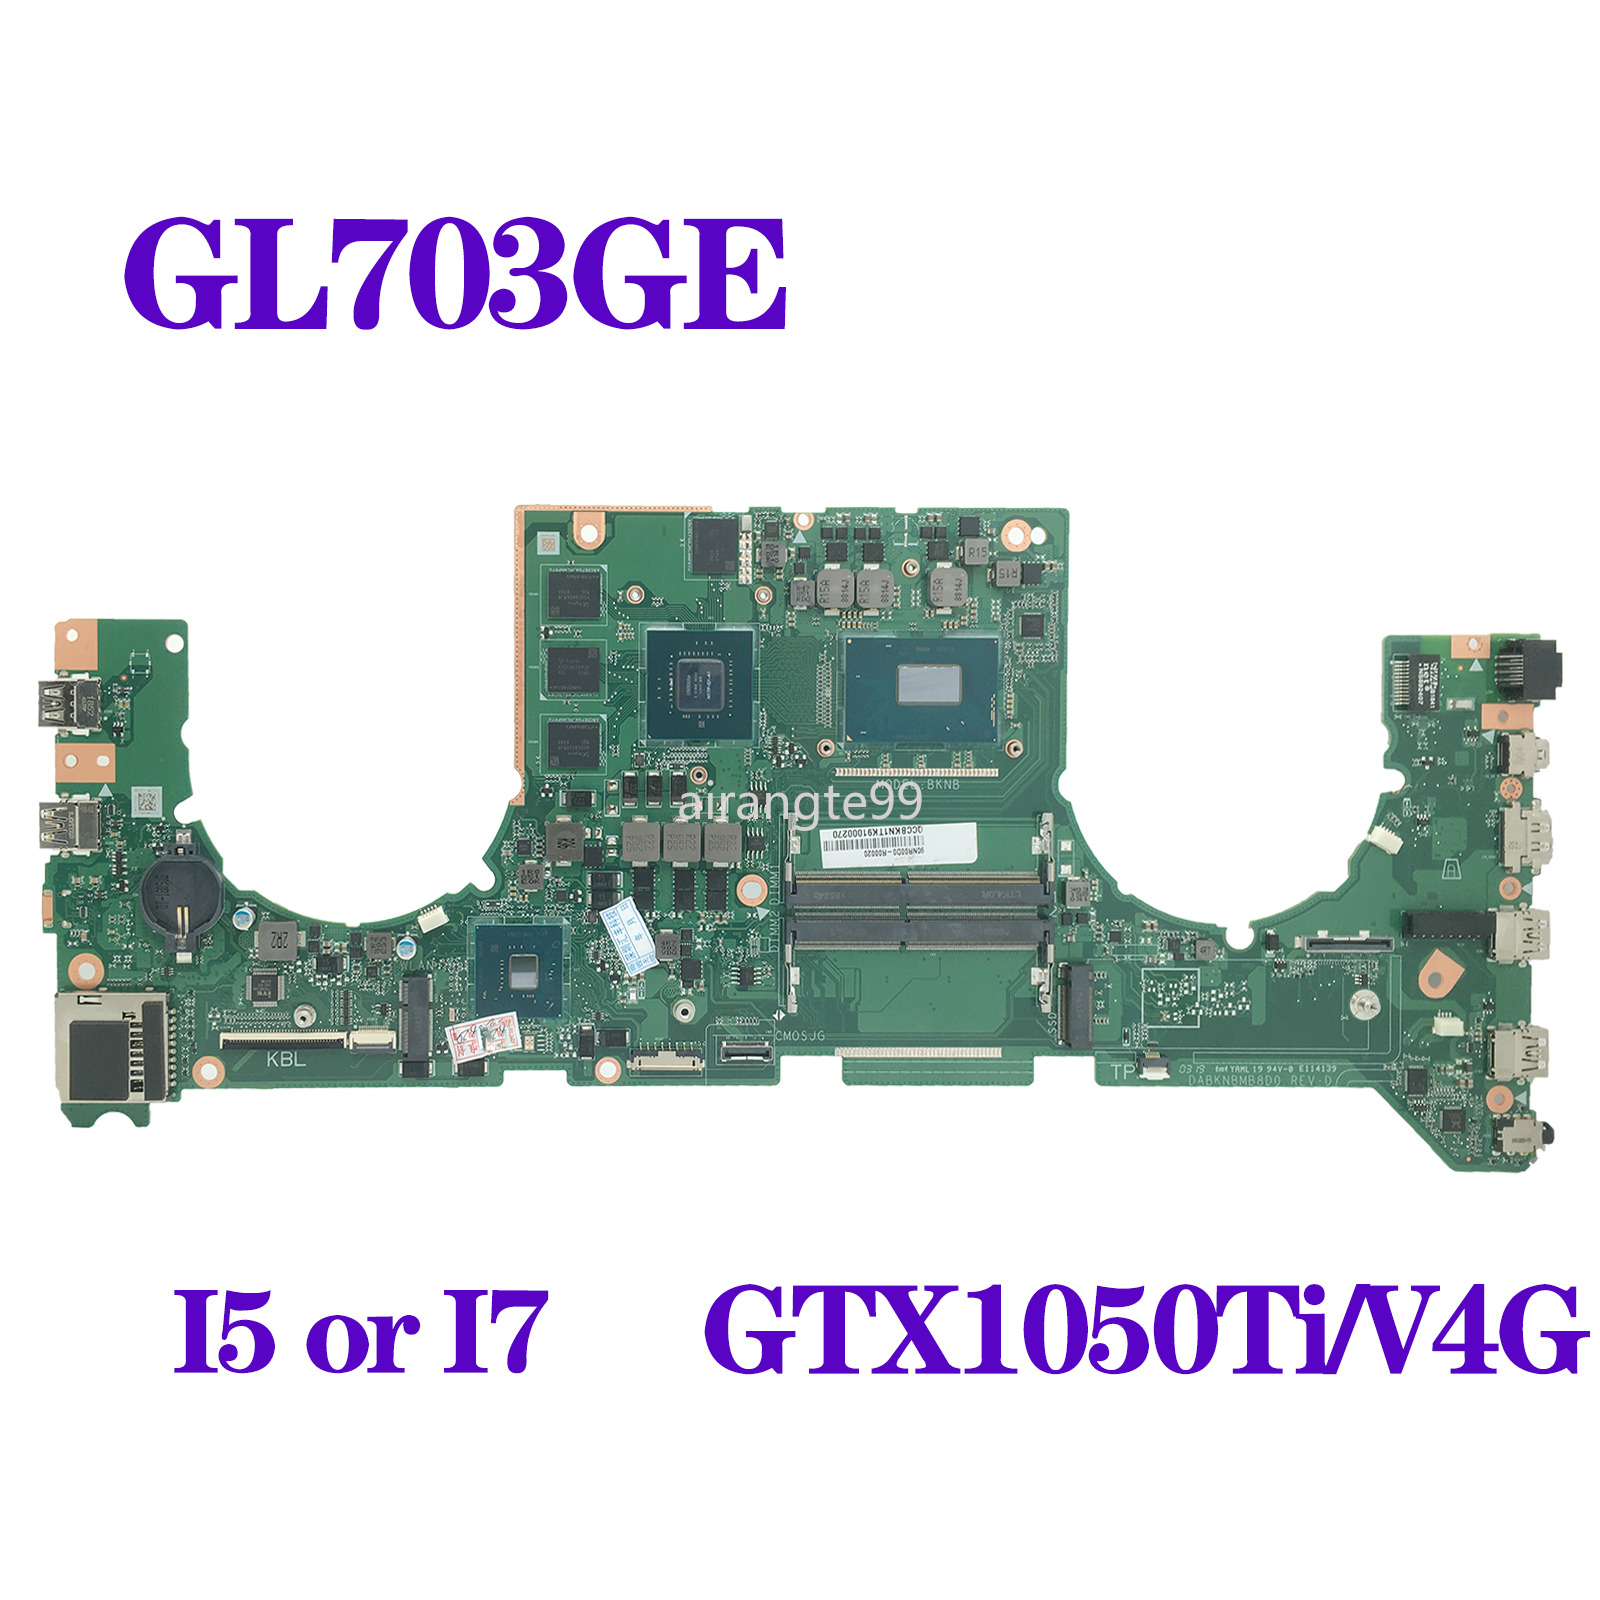 Motherboard For ASUS GL703GE S7BE DABKNBMB8D0 W/ I5-8300H I7-8750H GTX1050Ti/V4G